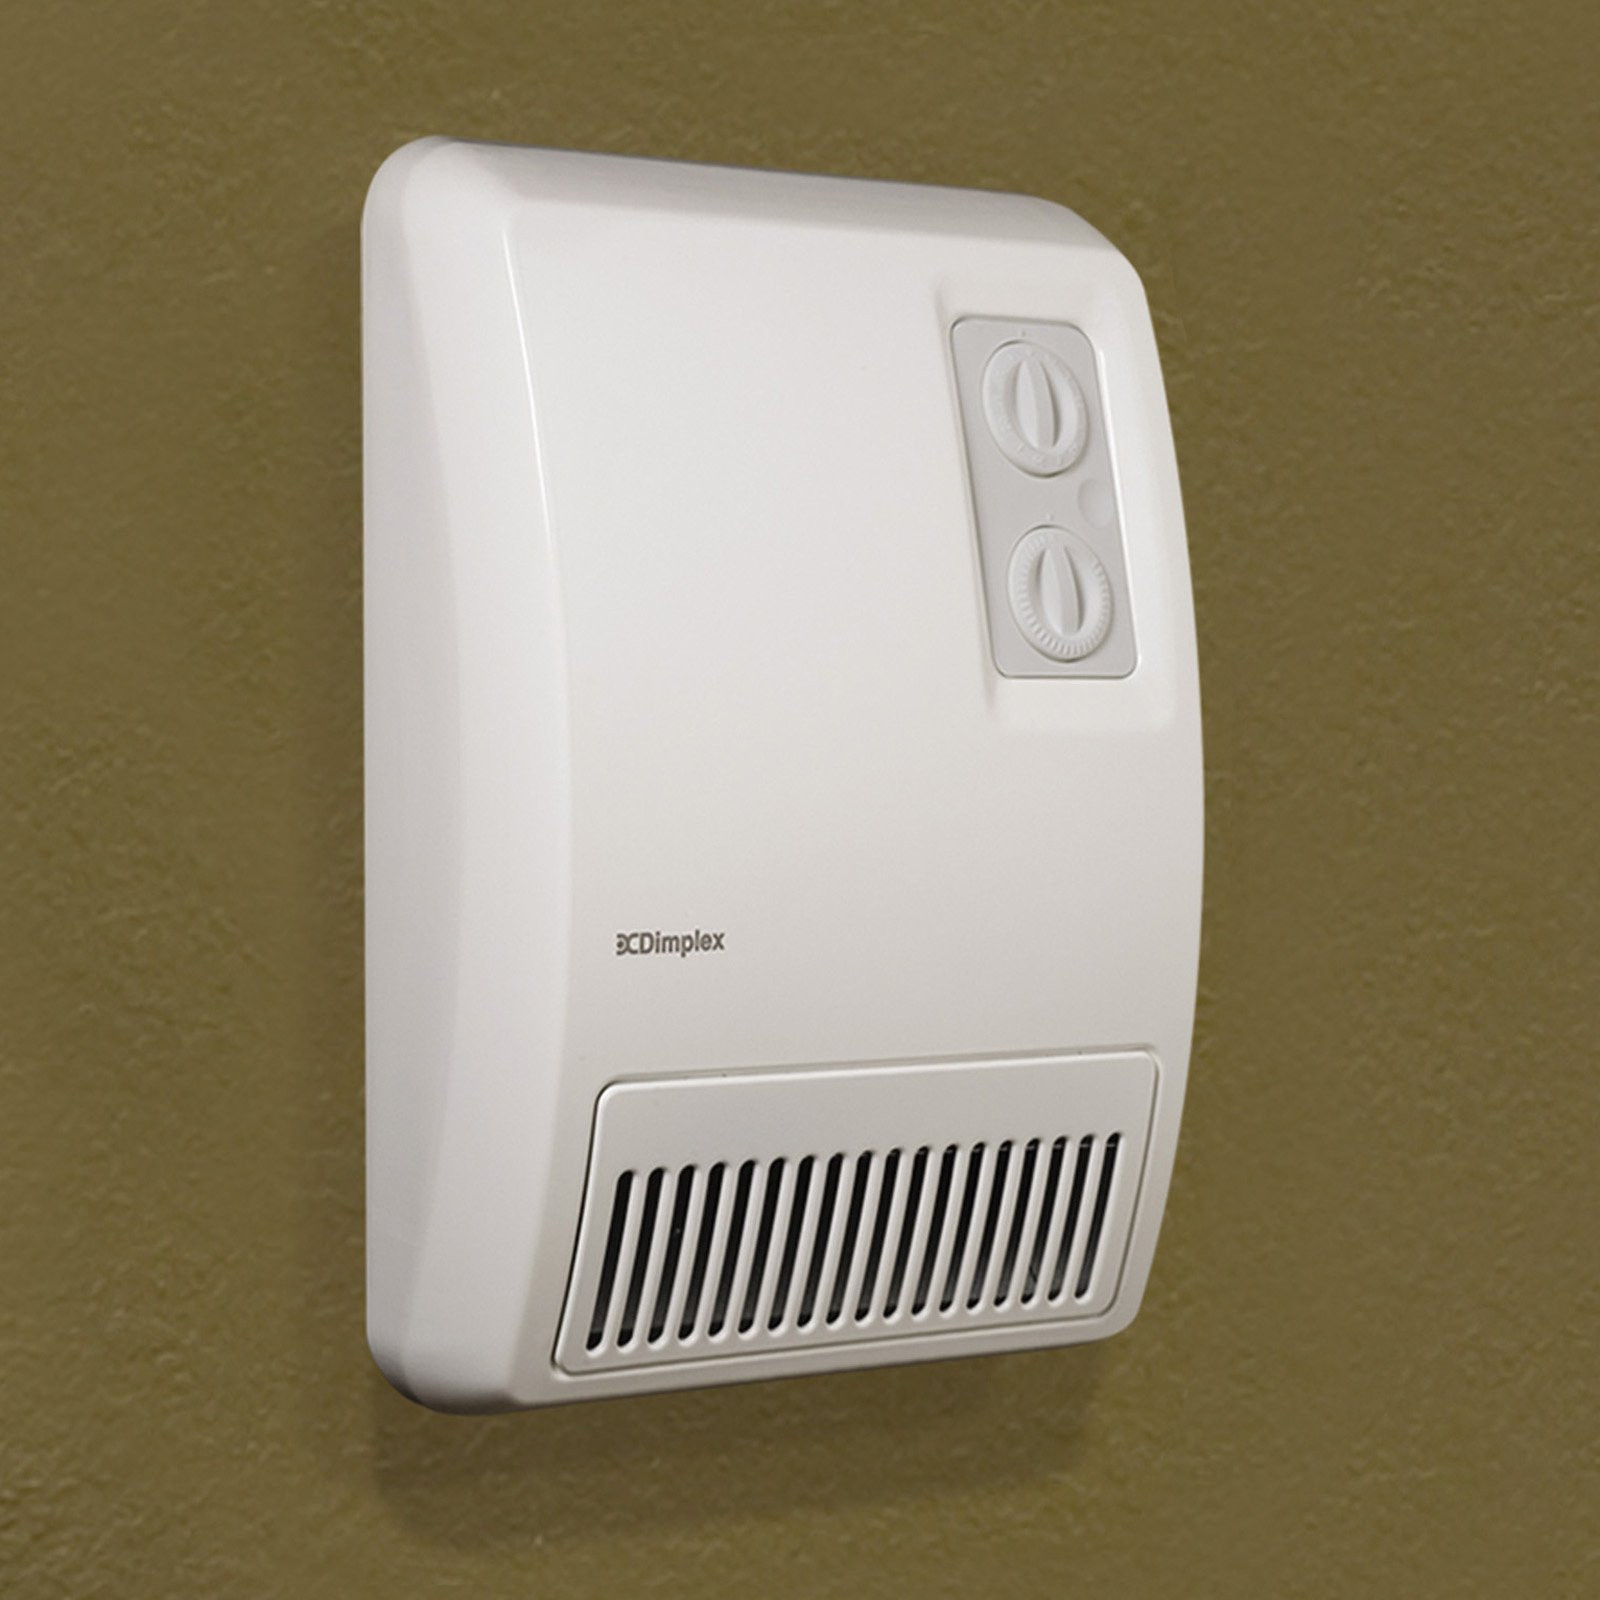 Bathroom Heaters Wall Mounted
 Dimplex EF12 Deluxe Fan Forced Wall Mounted Bathroom